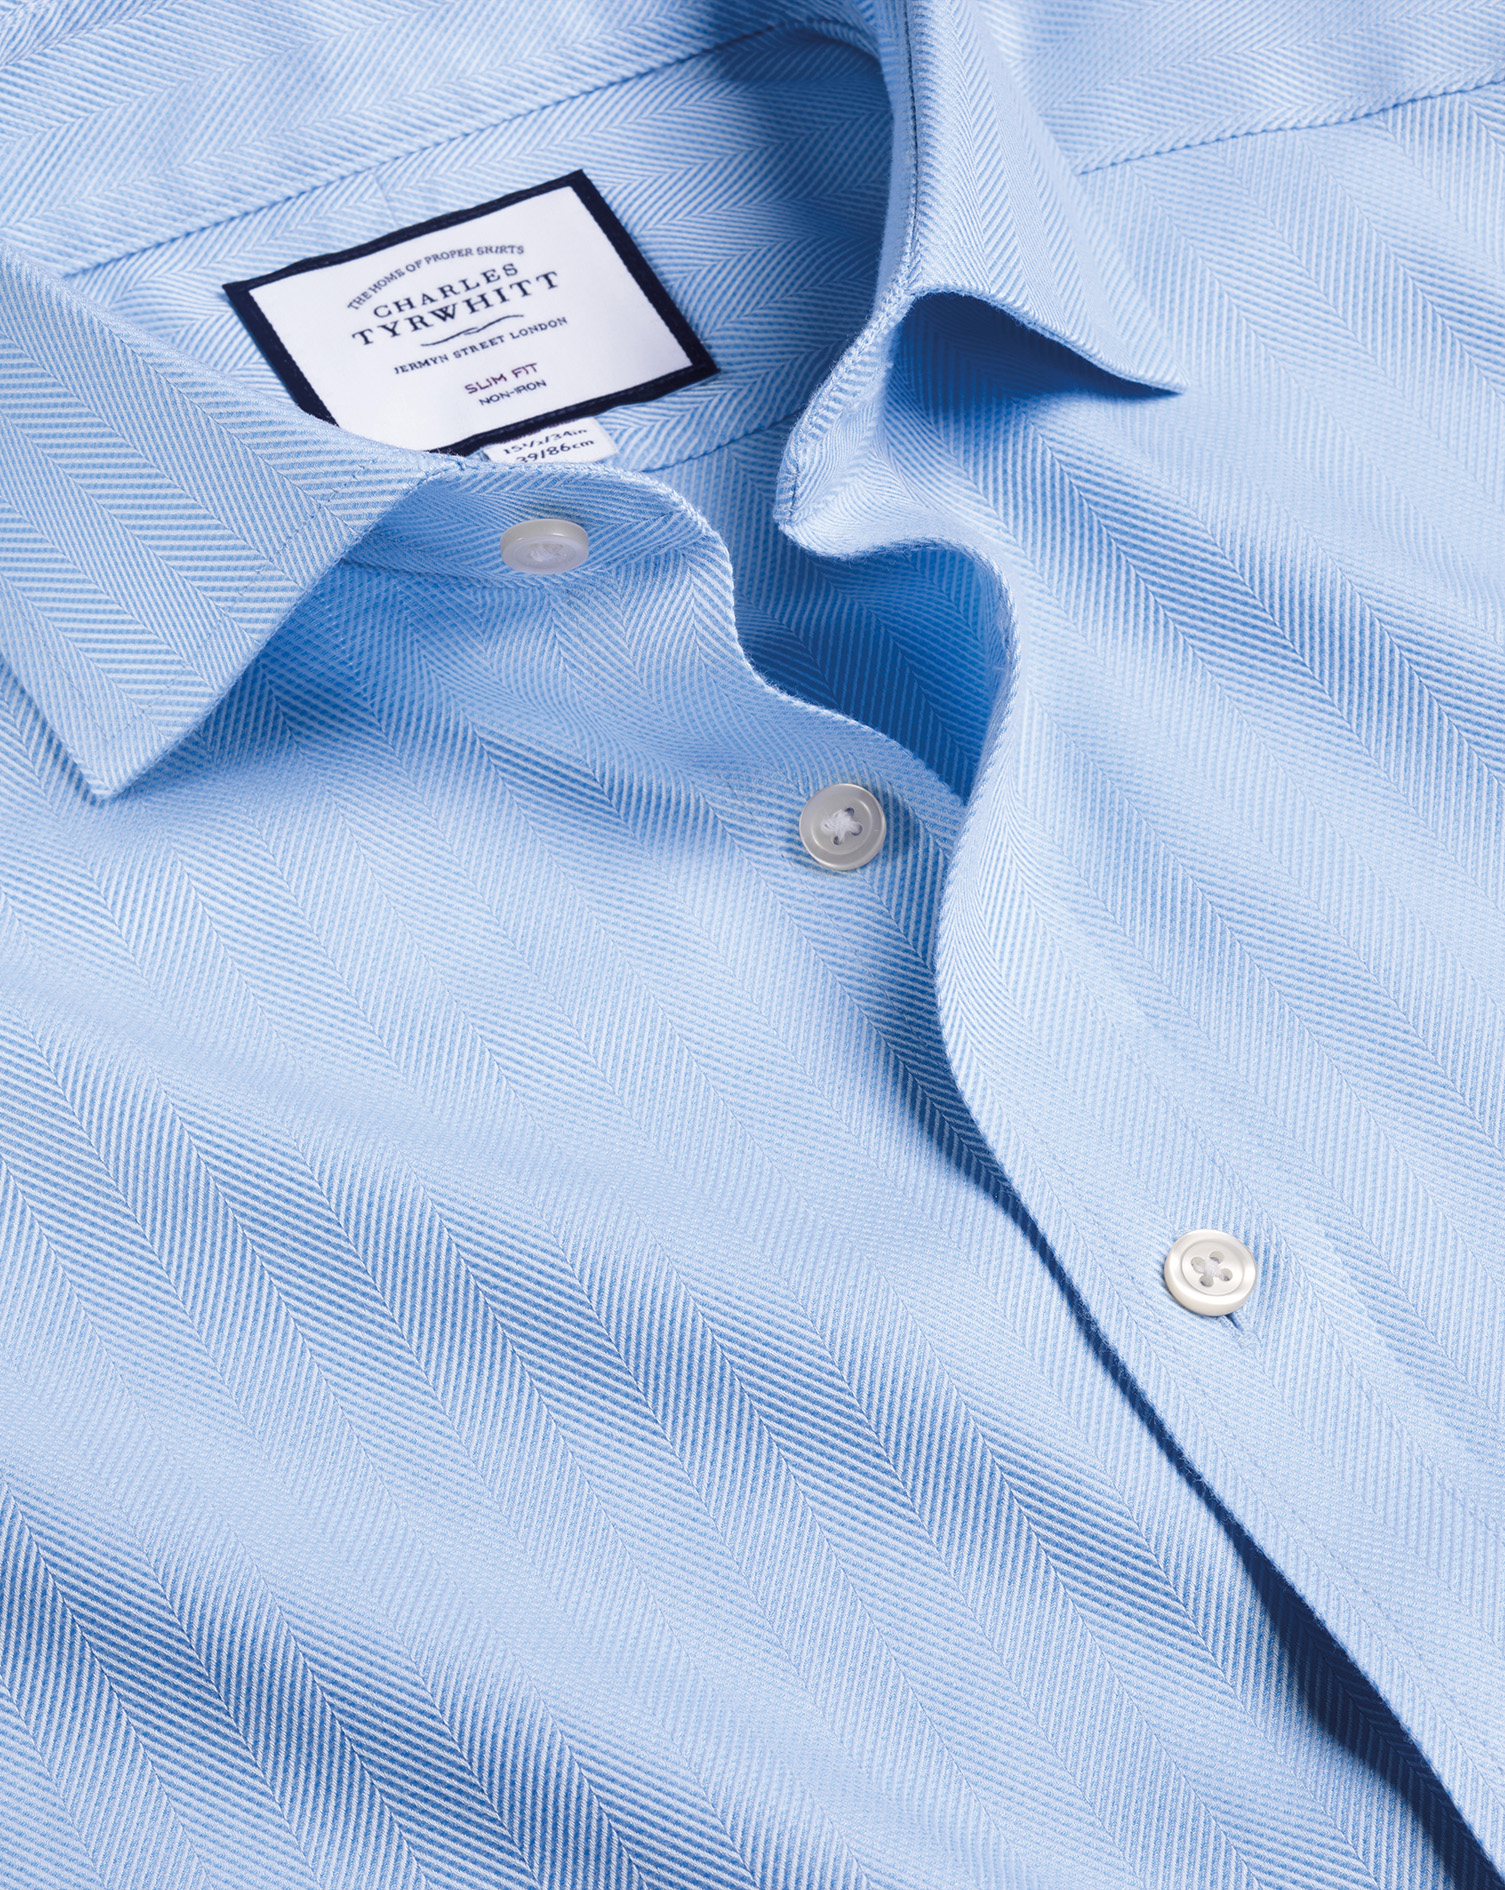 Men's Charles Tyrwhitt Cutaway Collar Non-Iron Herringbone Dress Shirt - Sky Blue French Cuff Size L